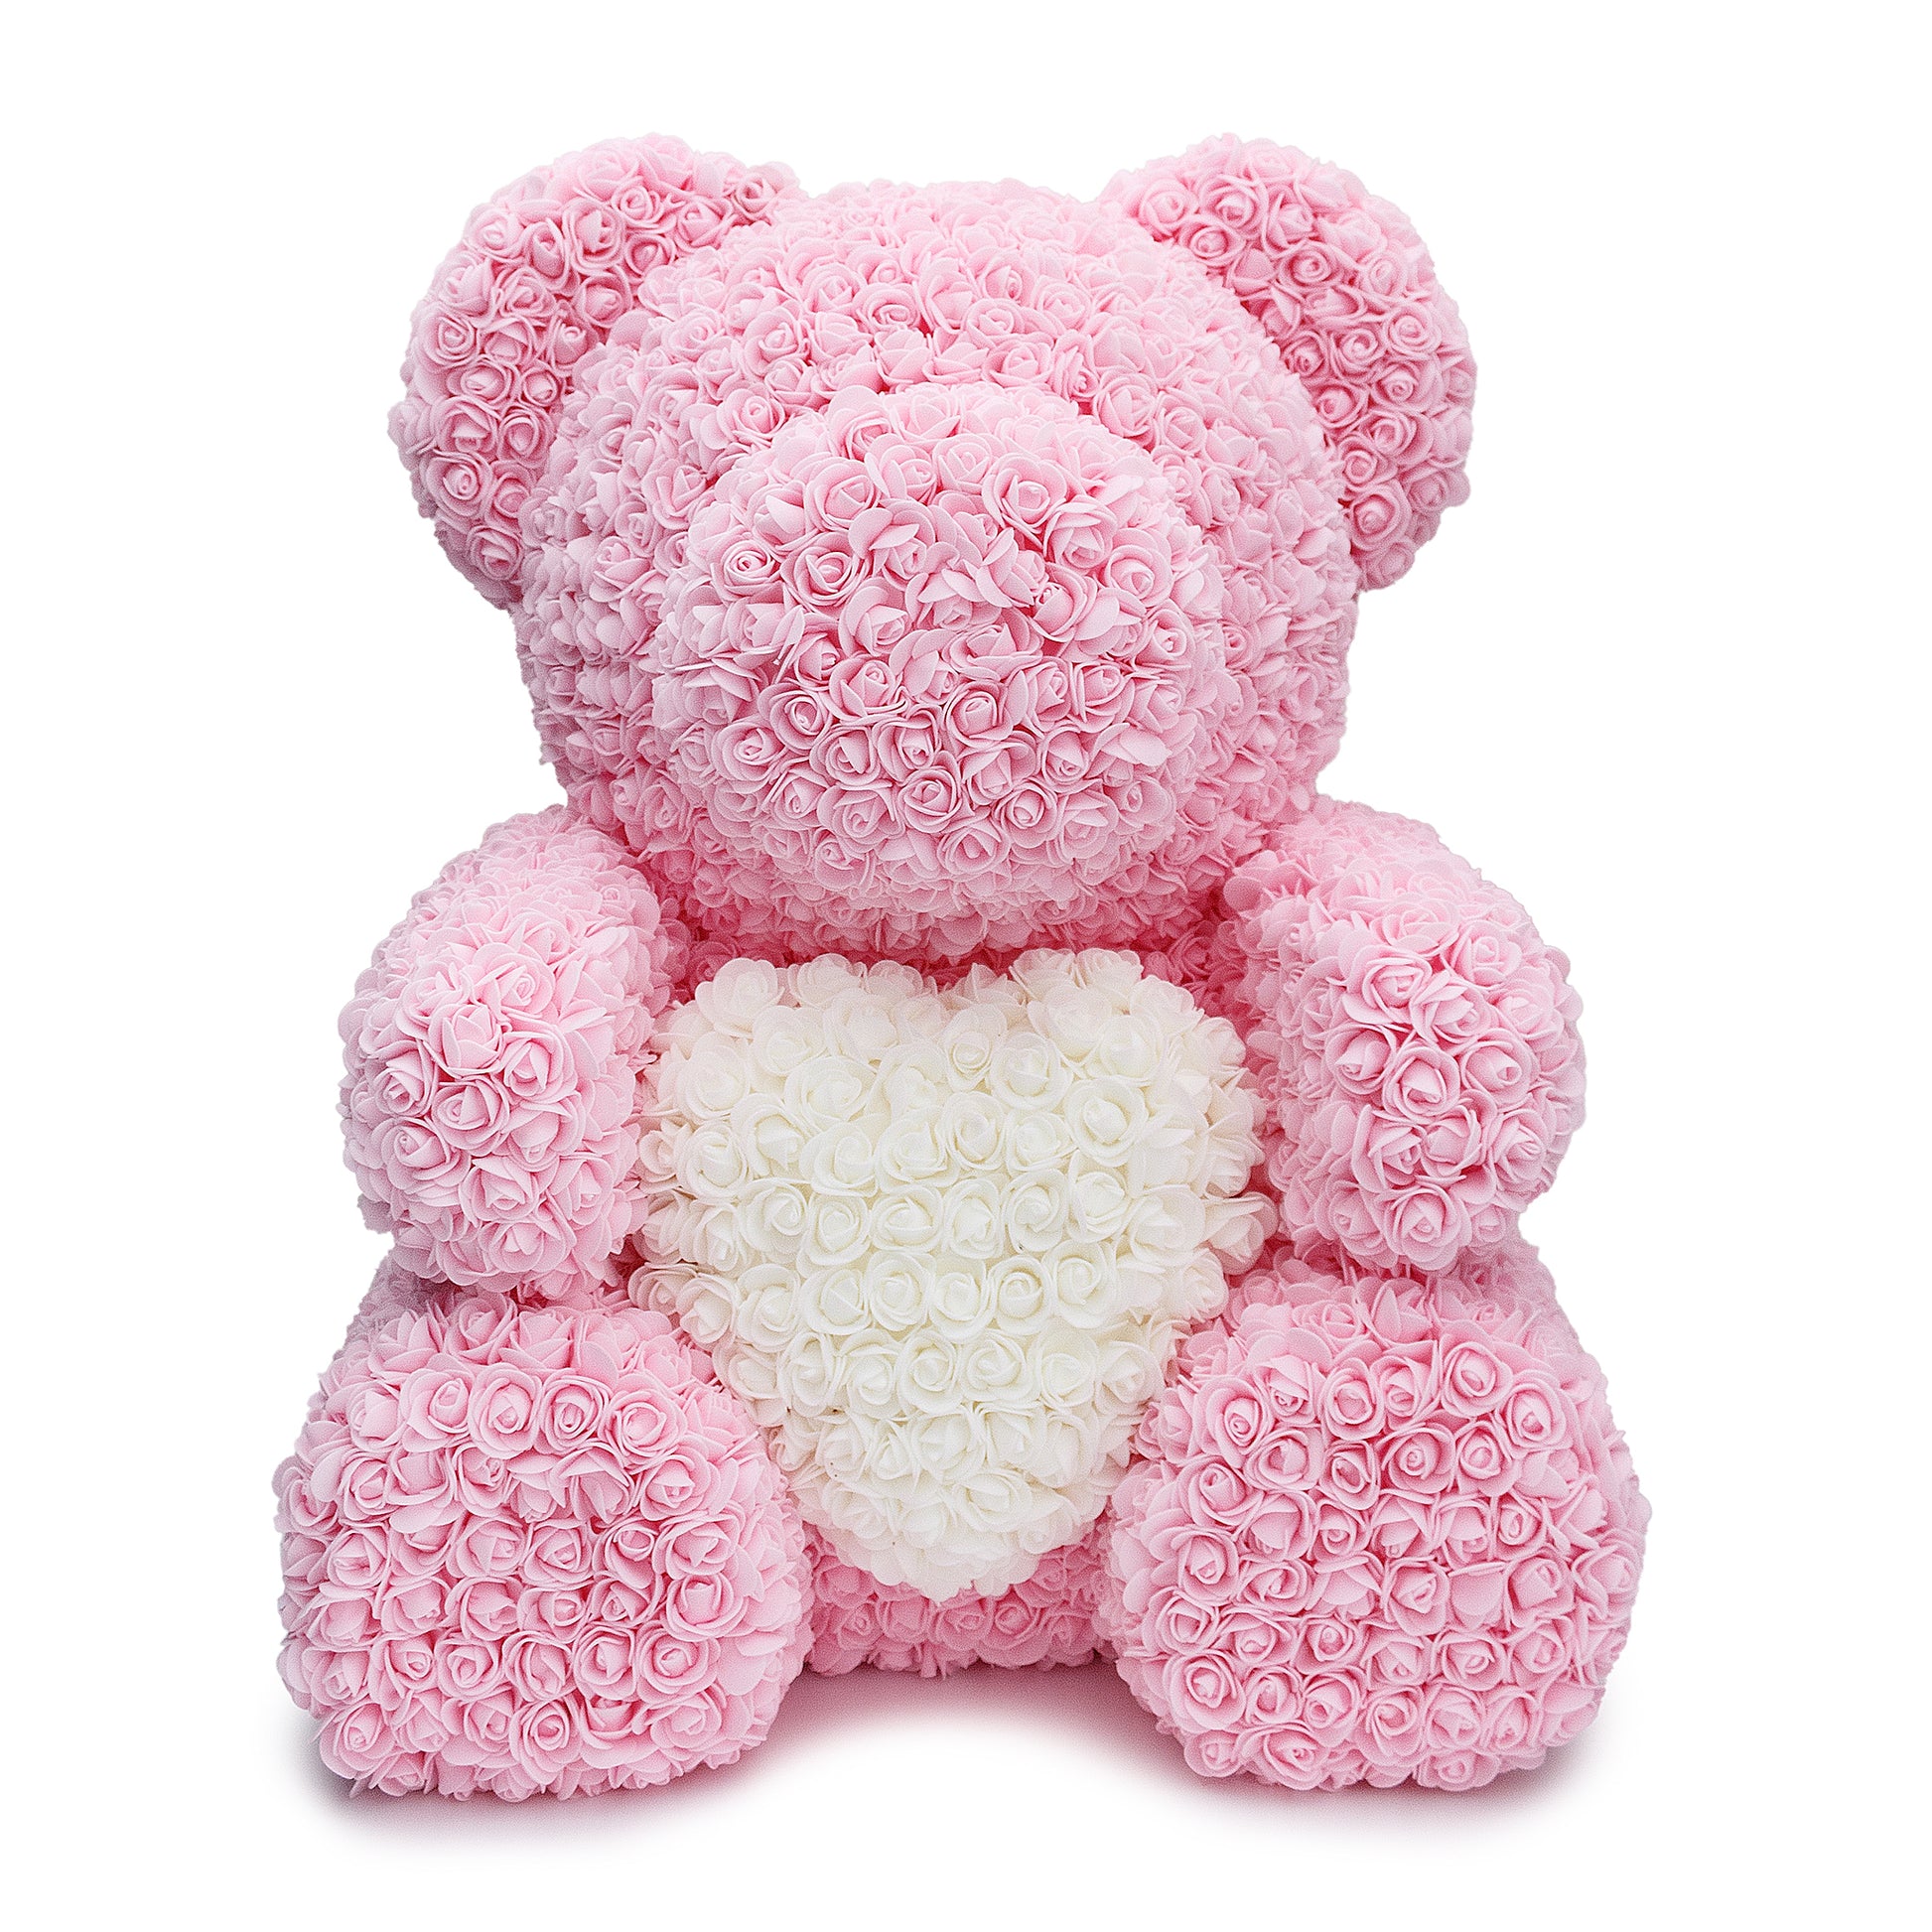 BIG Pink Rose Teddy Bear & White Heart -1